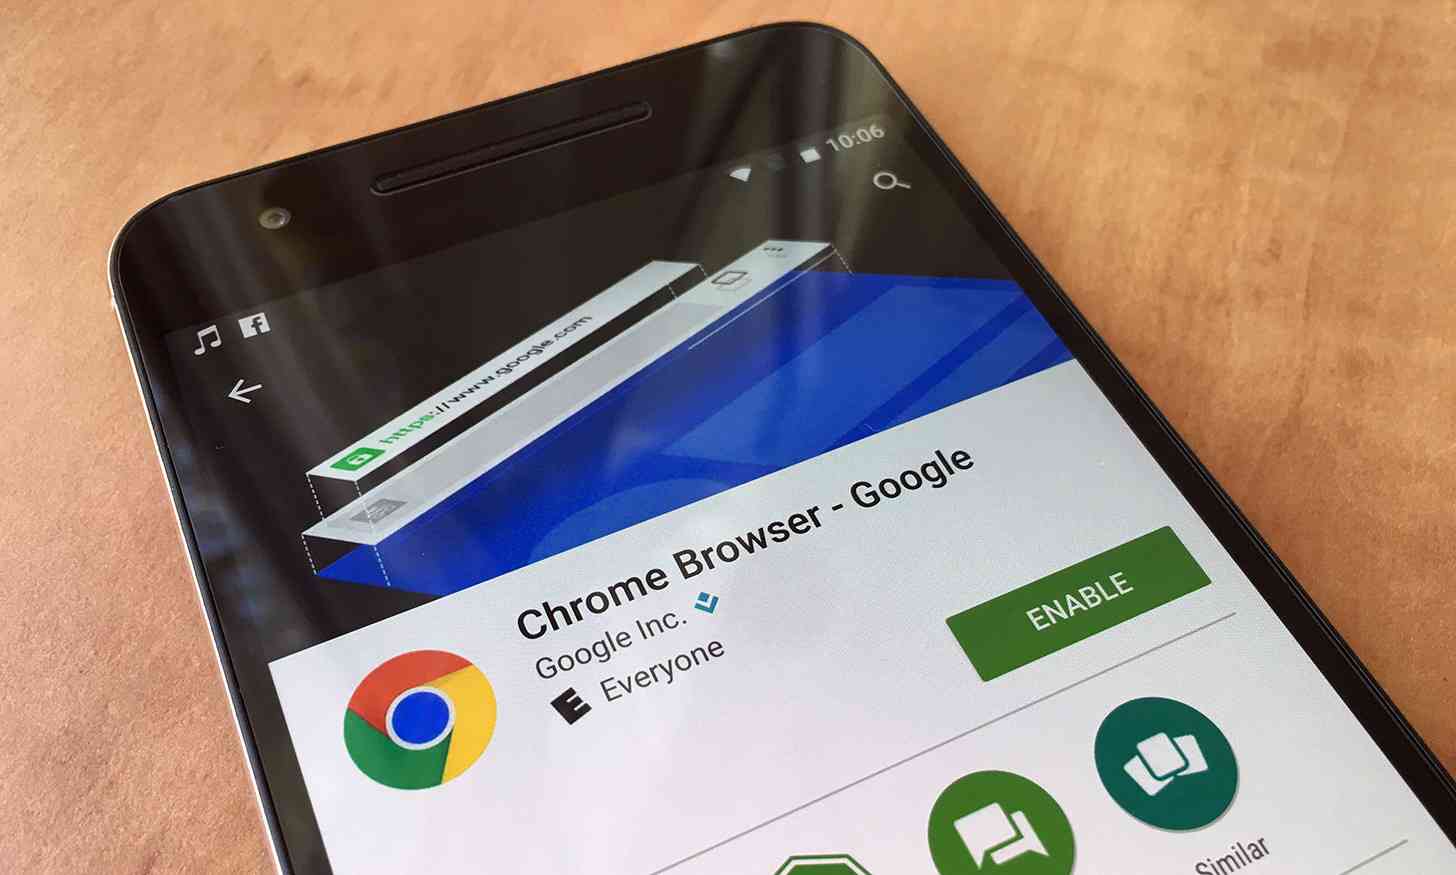 Google Chrome Play Store app listing